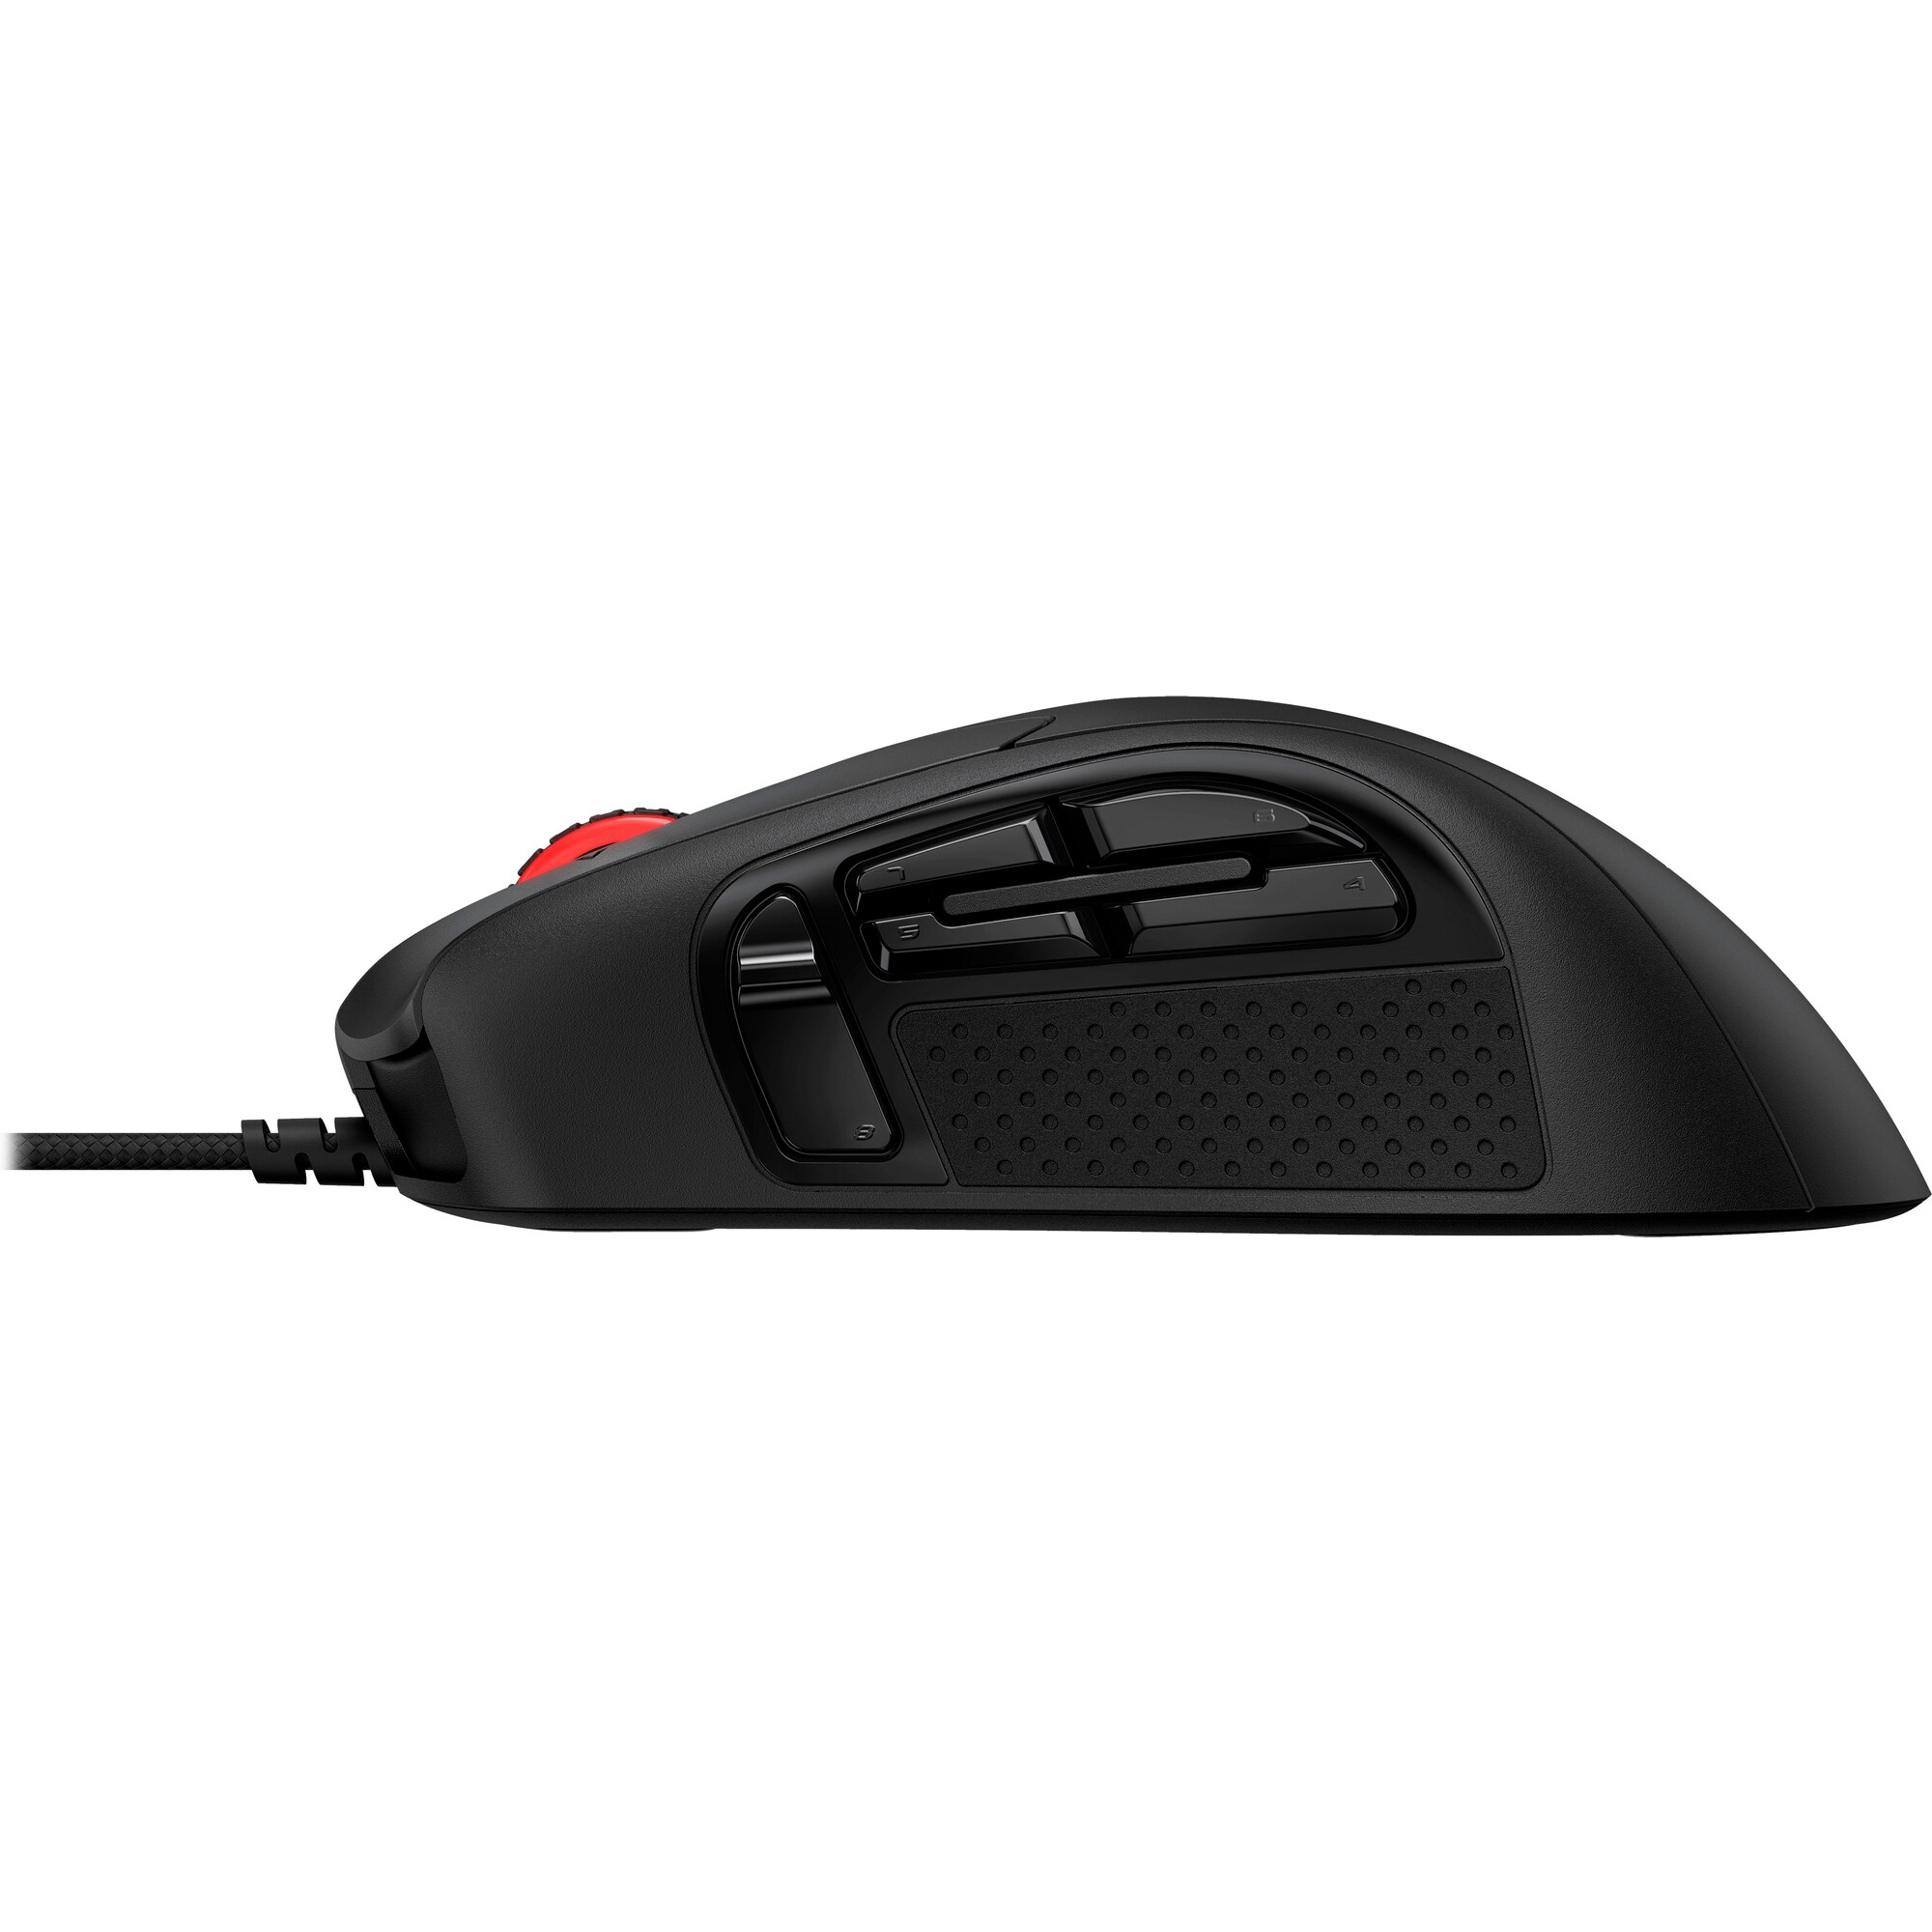 HyperX Pulsefire Raid - Gaming Mouse (Black) (HX-MC005B) - Myš4 